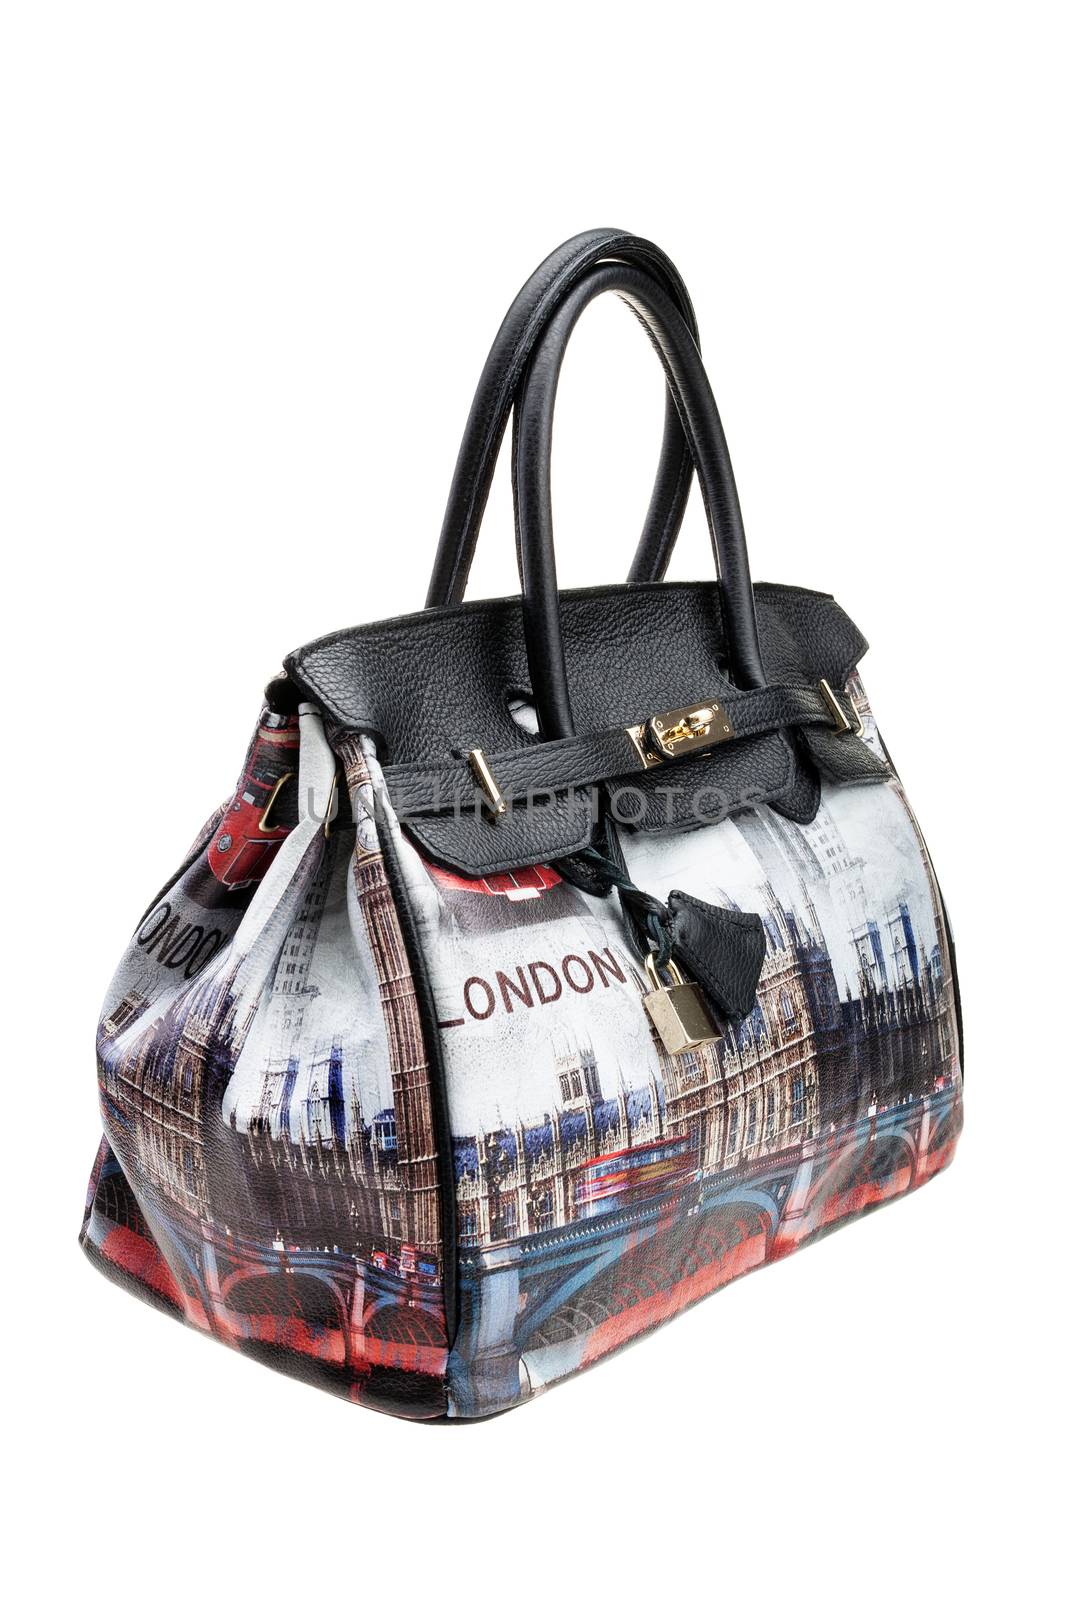 Modern womens bag, London stile, isolated on white background.